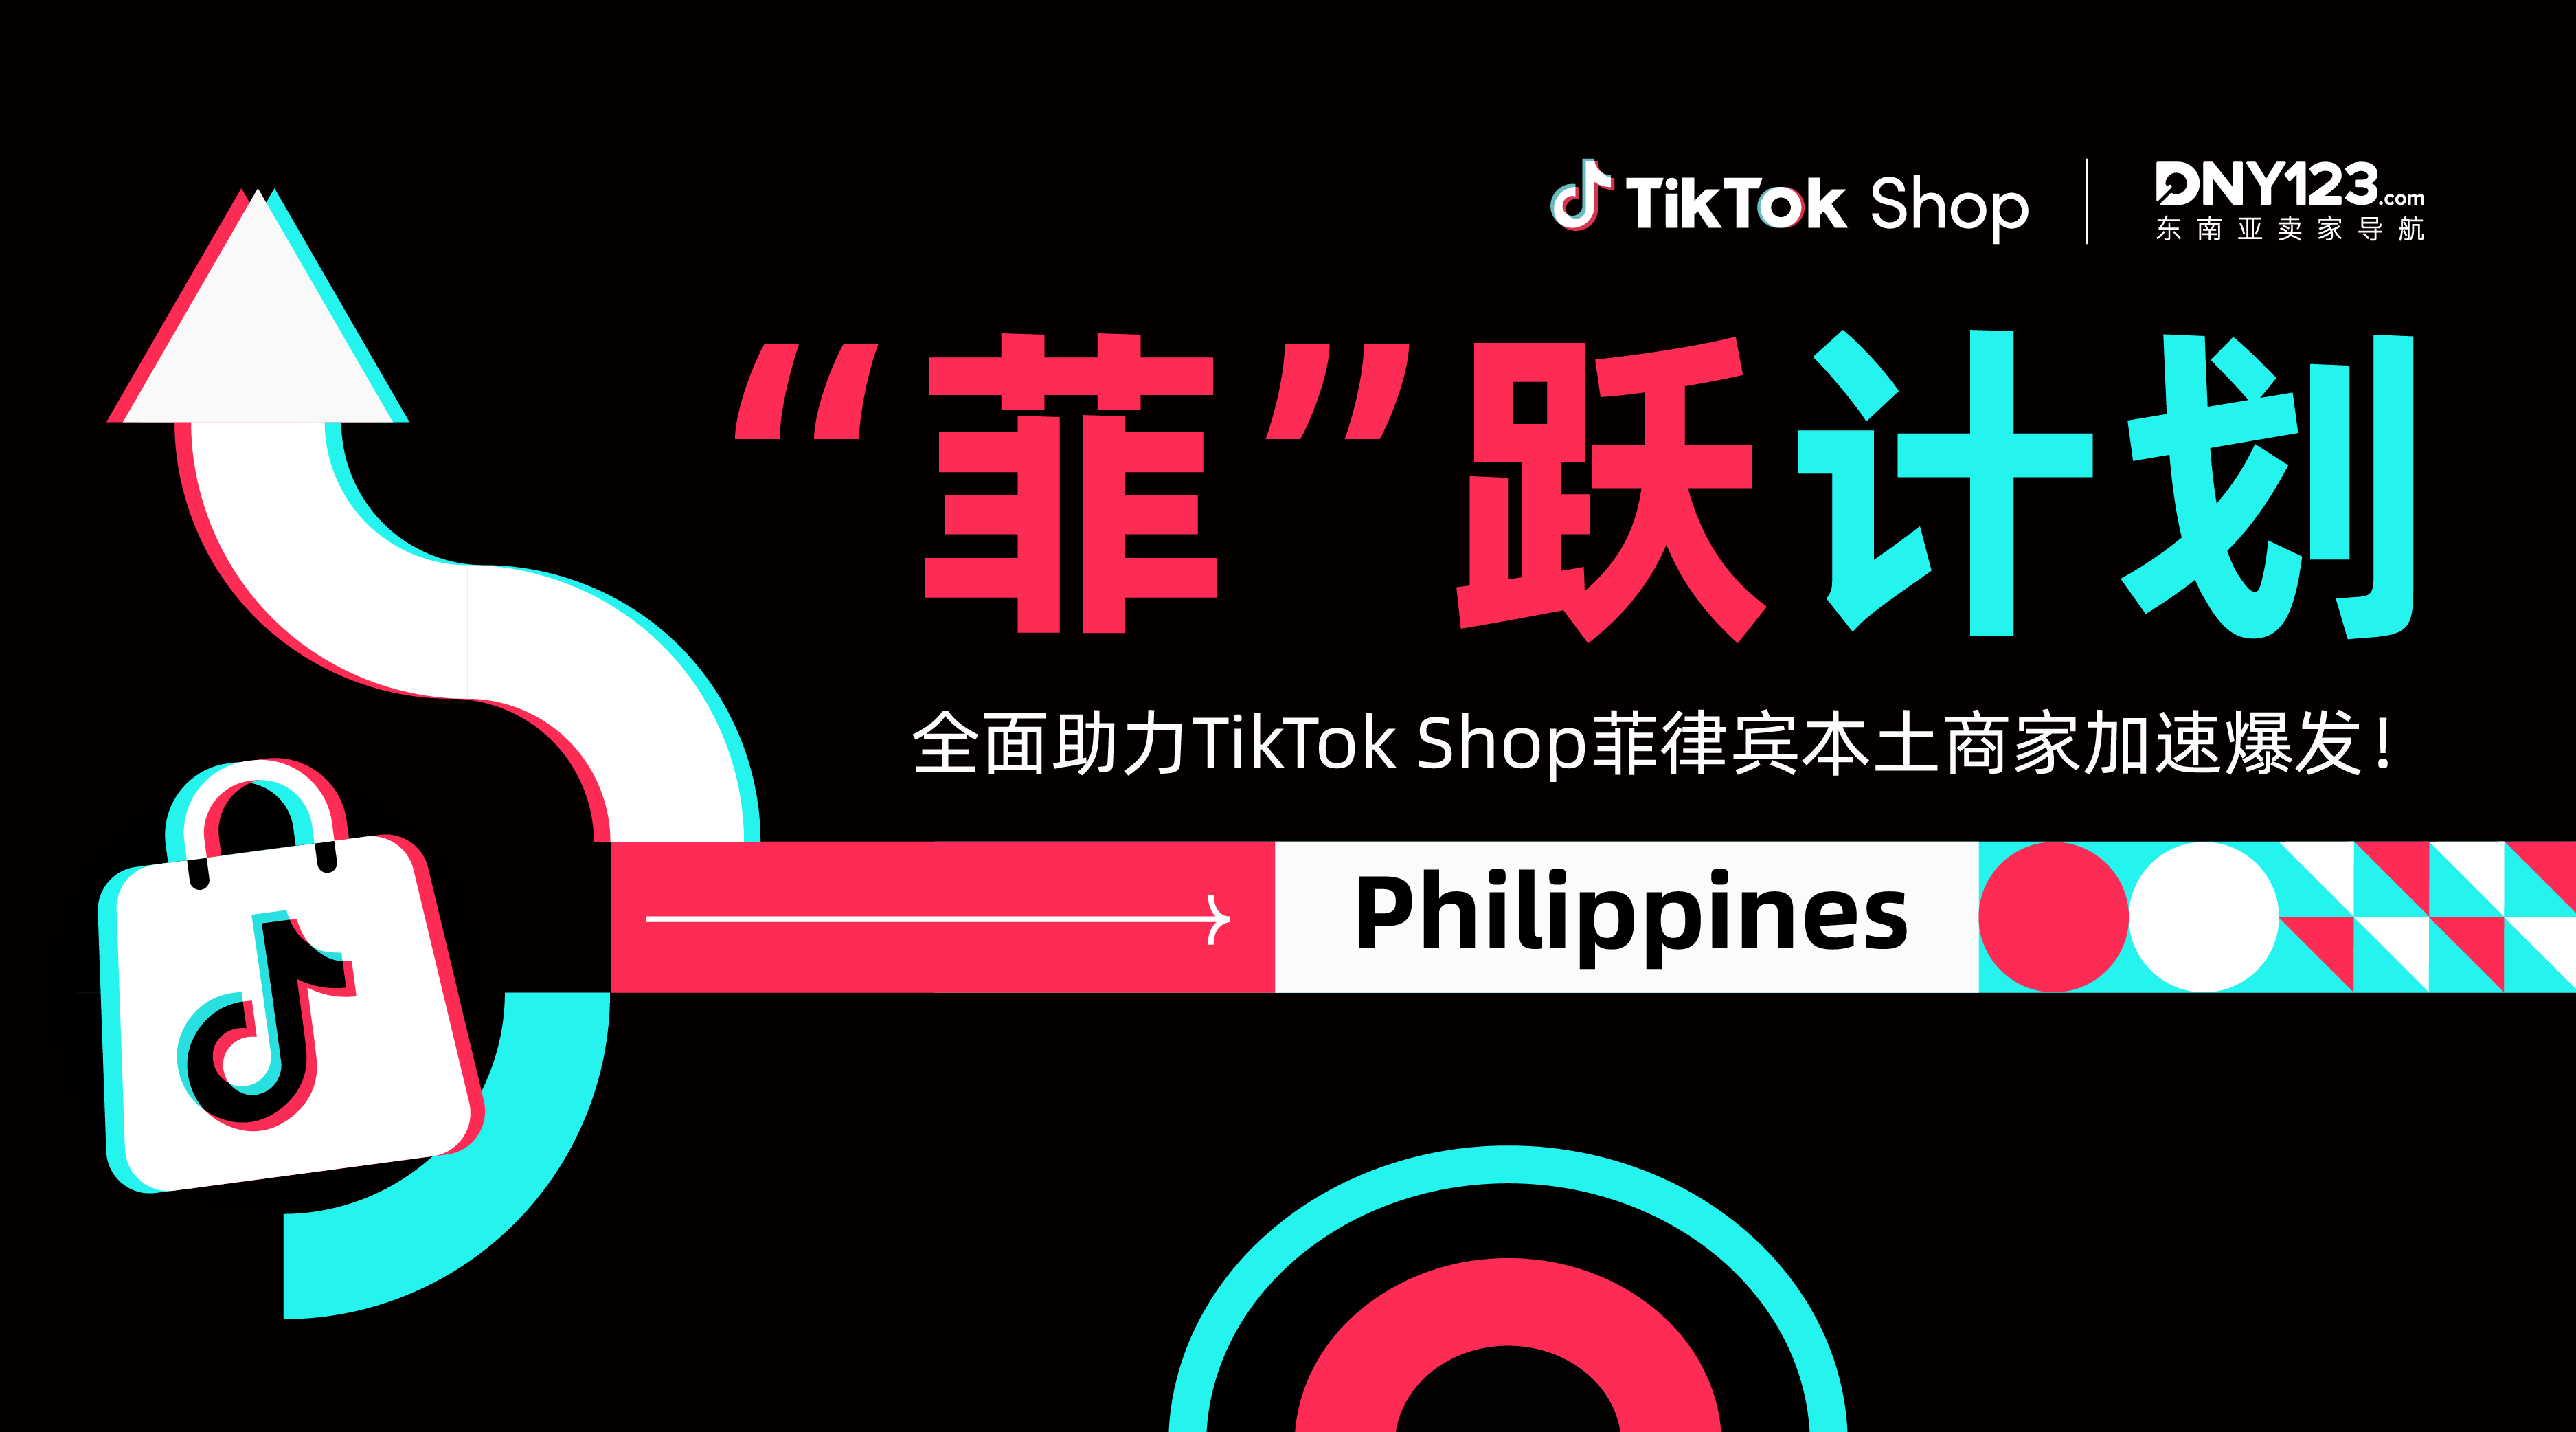 【TikTok Shop菲跃计划】全面助力TikTok Shop菲律宾本土市场商家加速爆发!